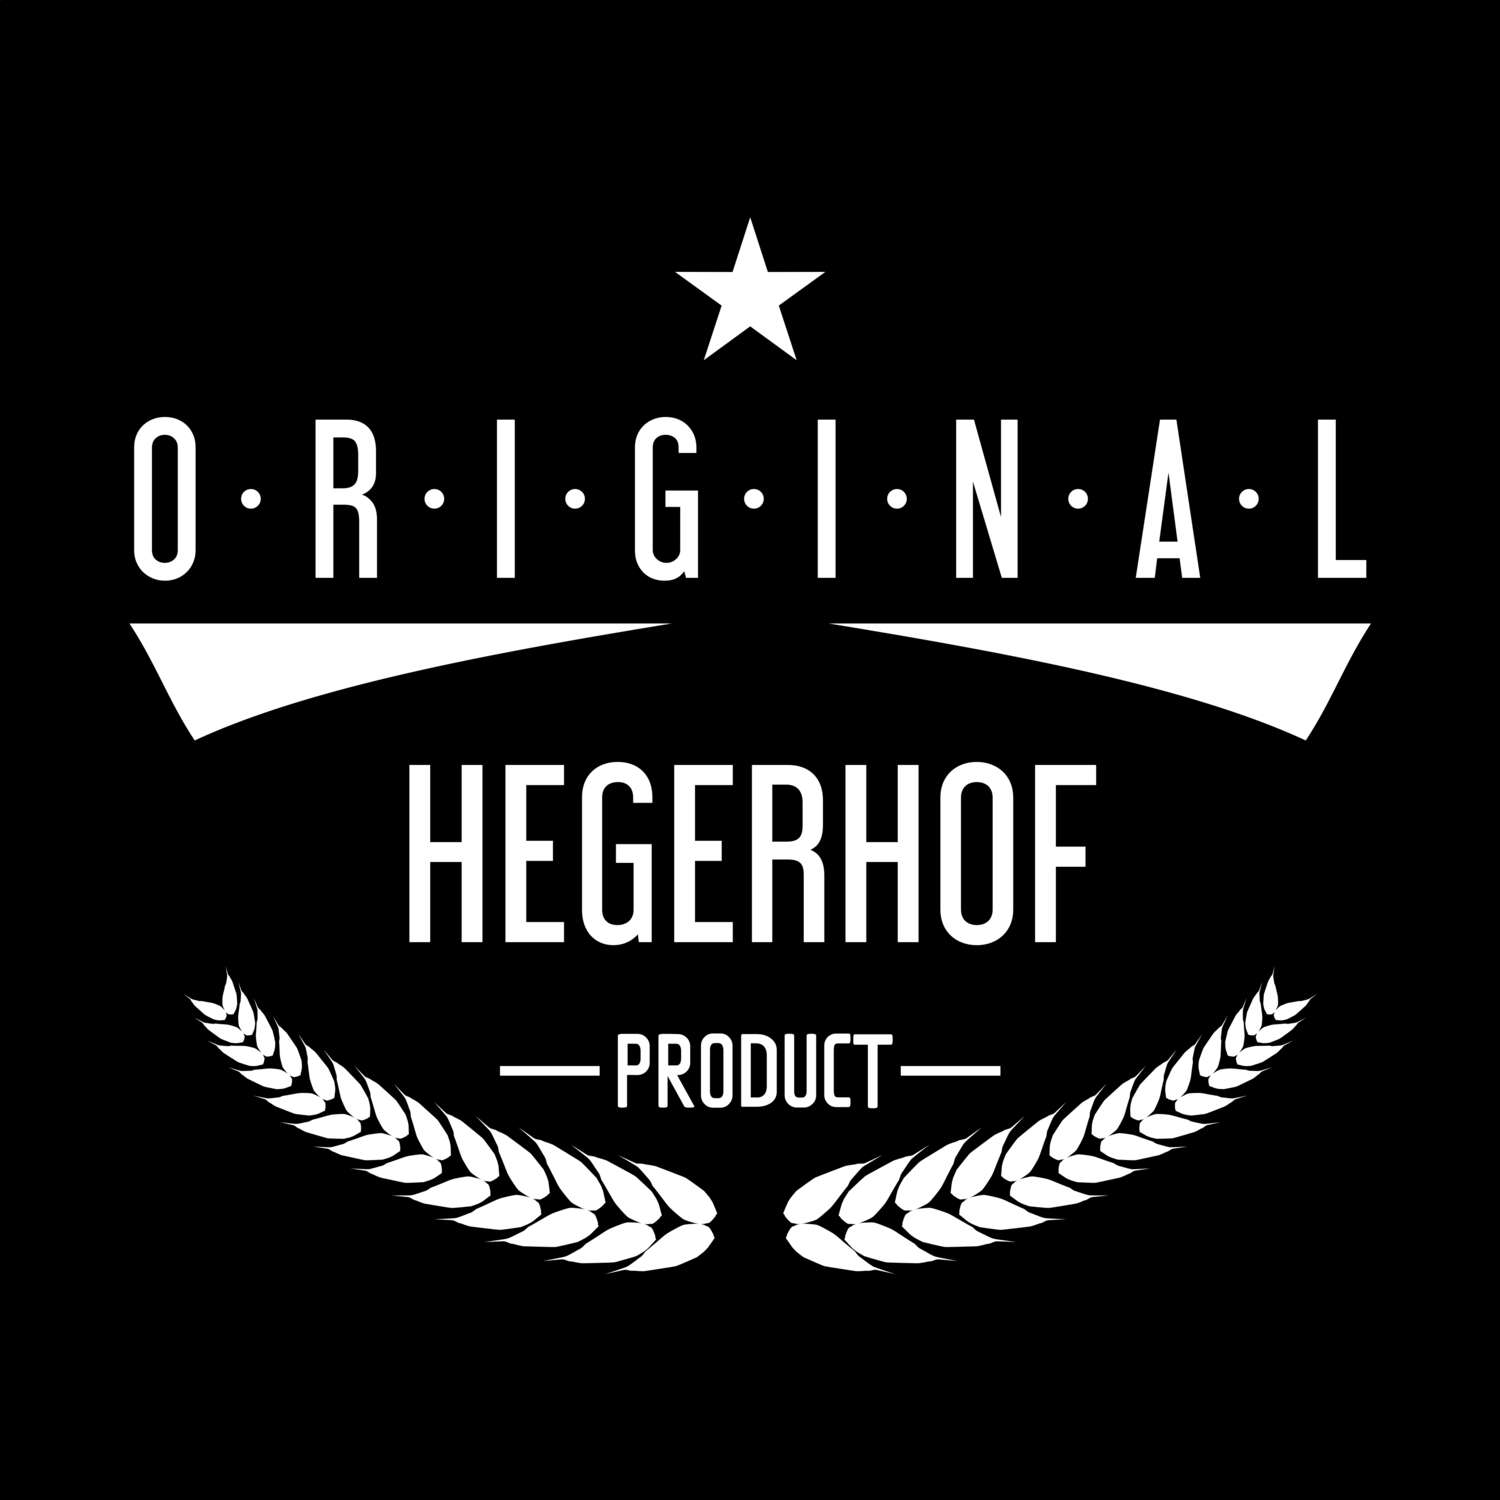 Hegerhof T-Shirt »Original Product«